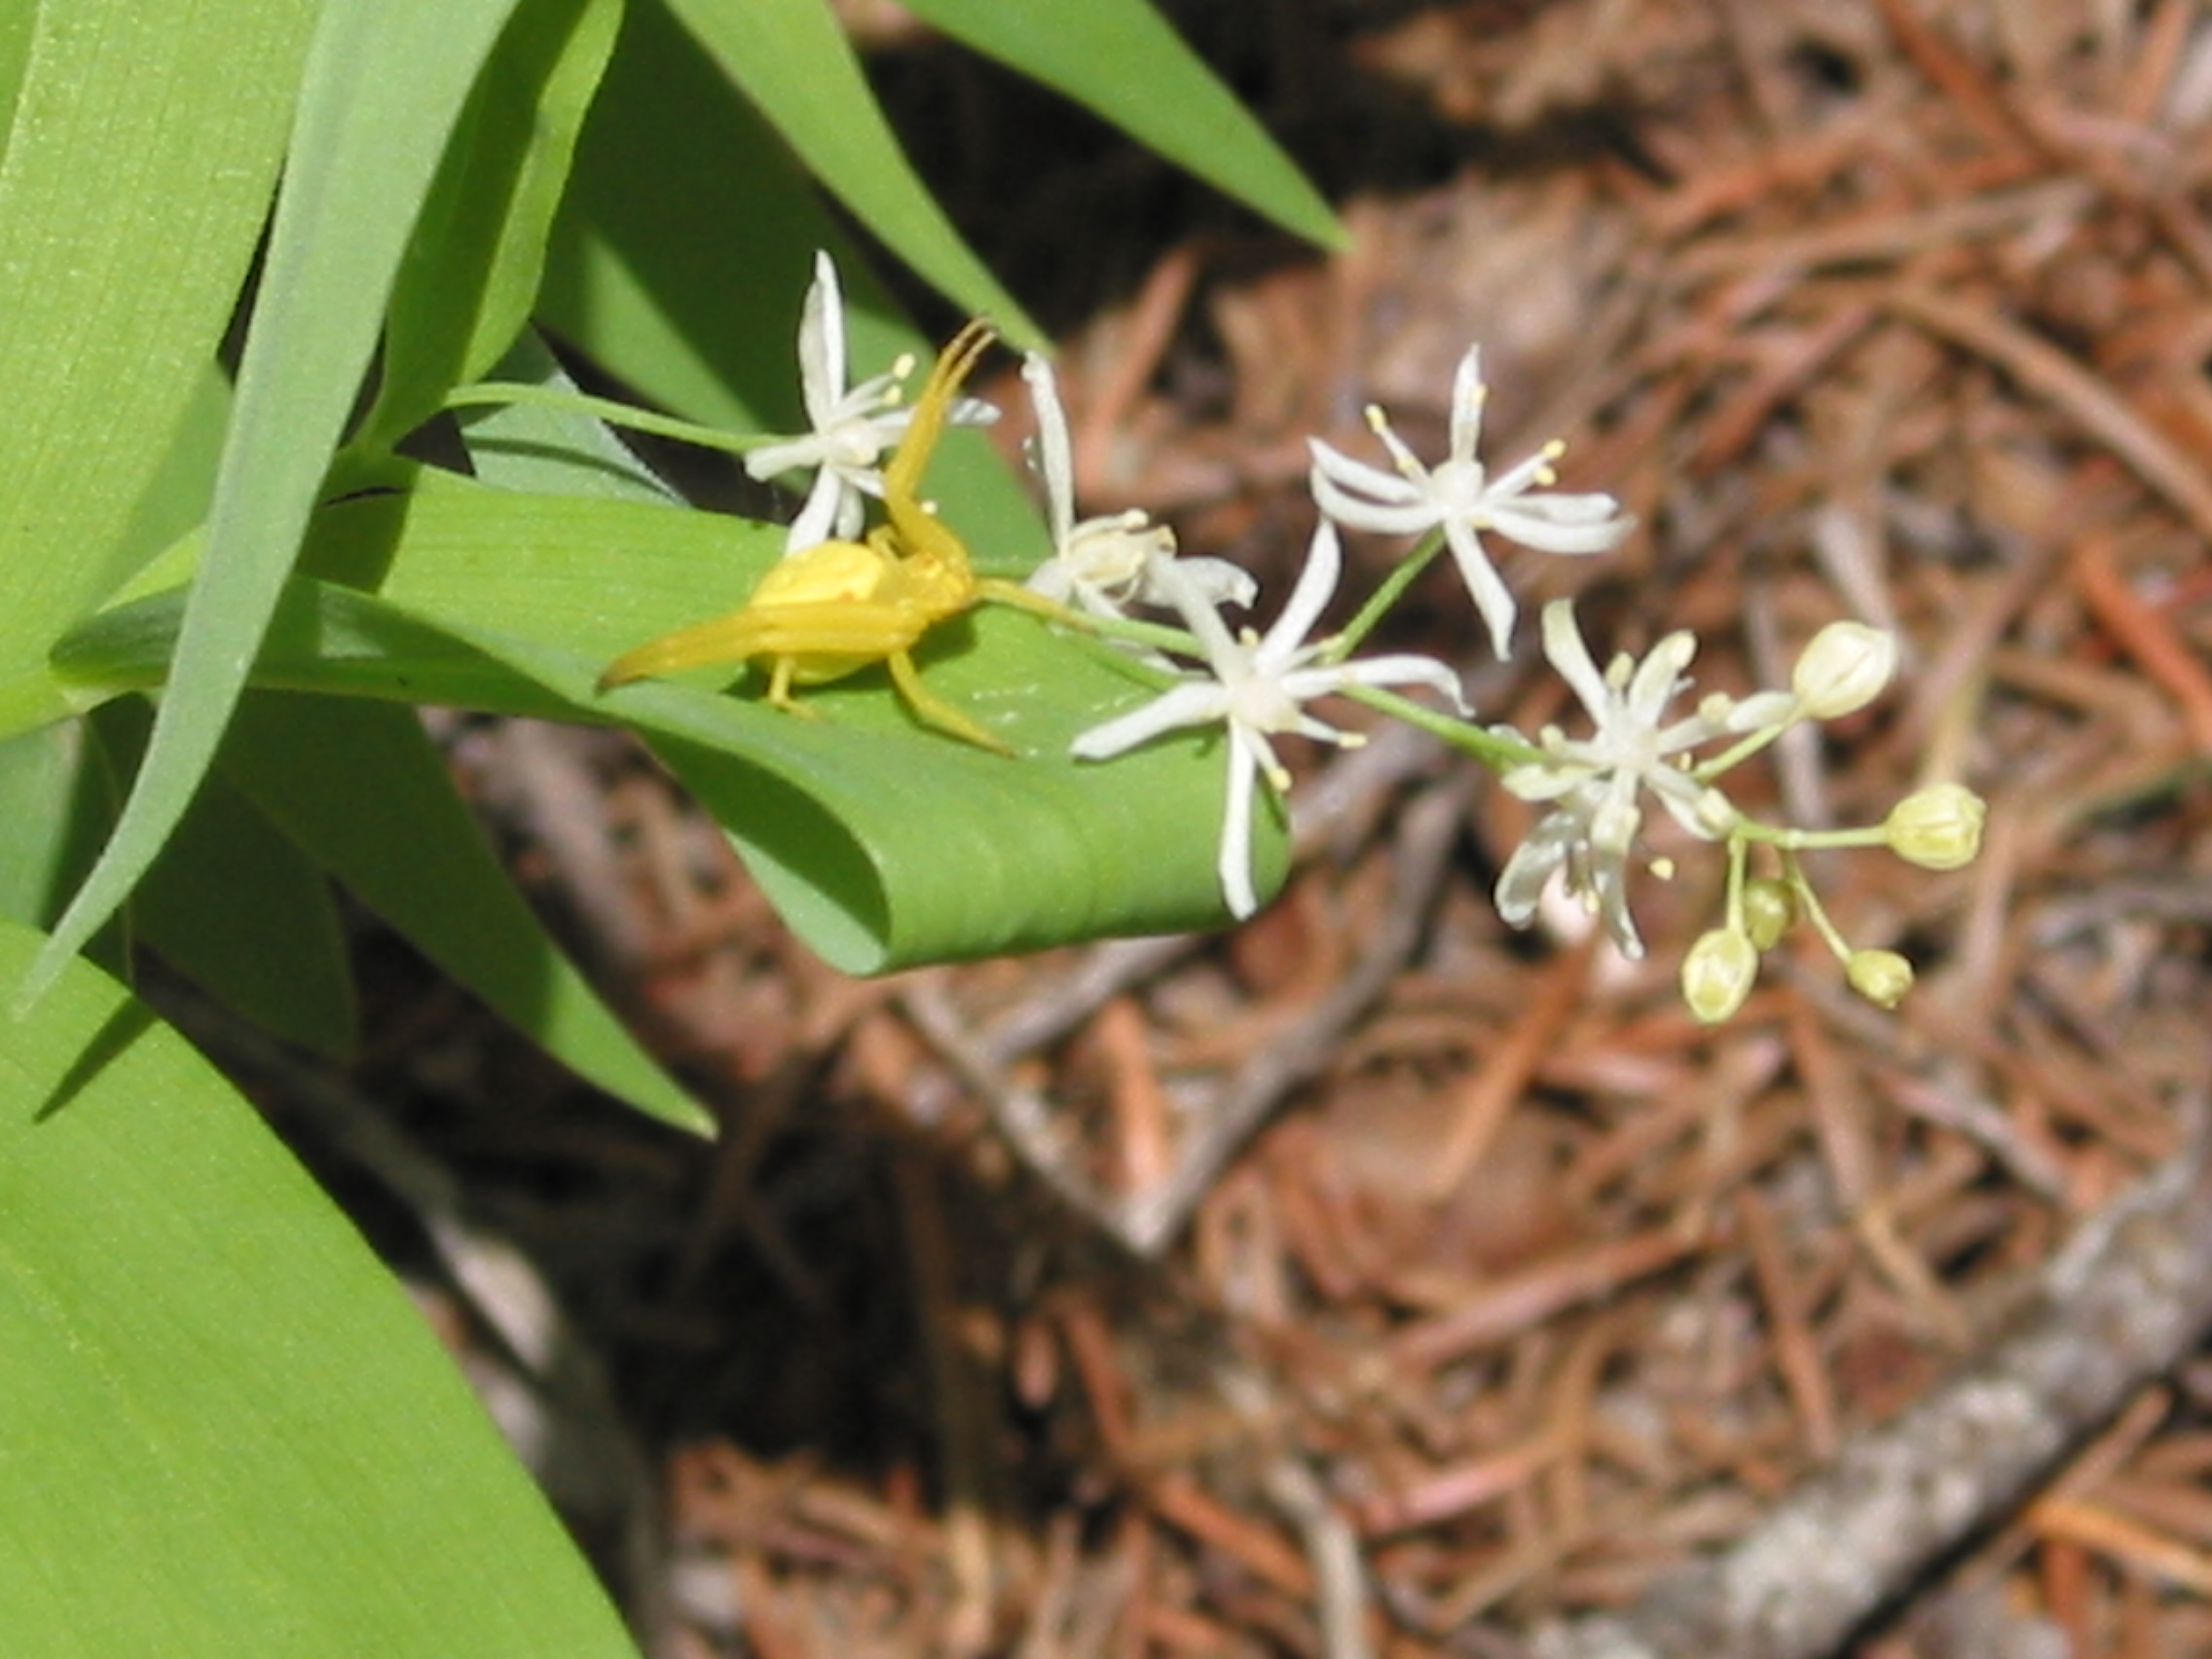 Wild Lily of the Valley (Smilacina stellata)